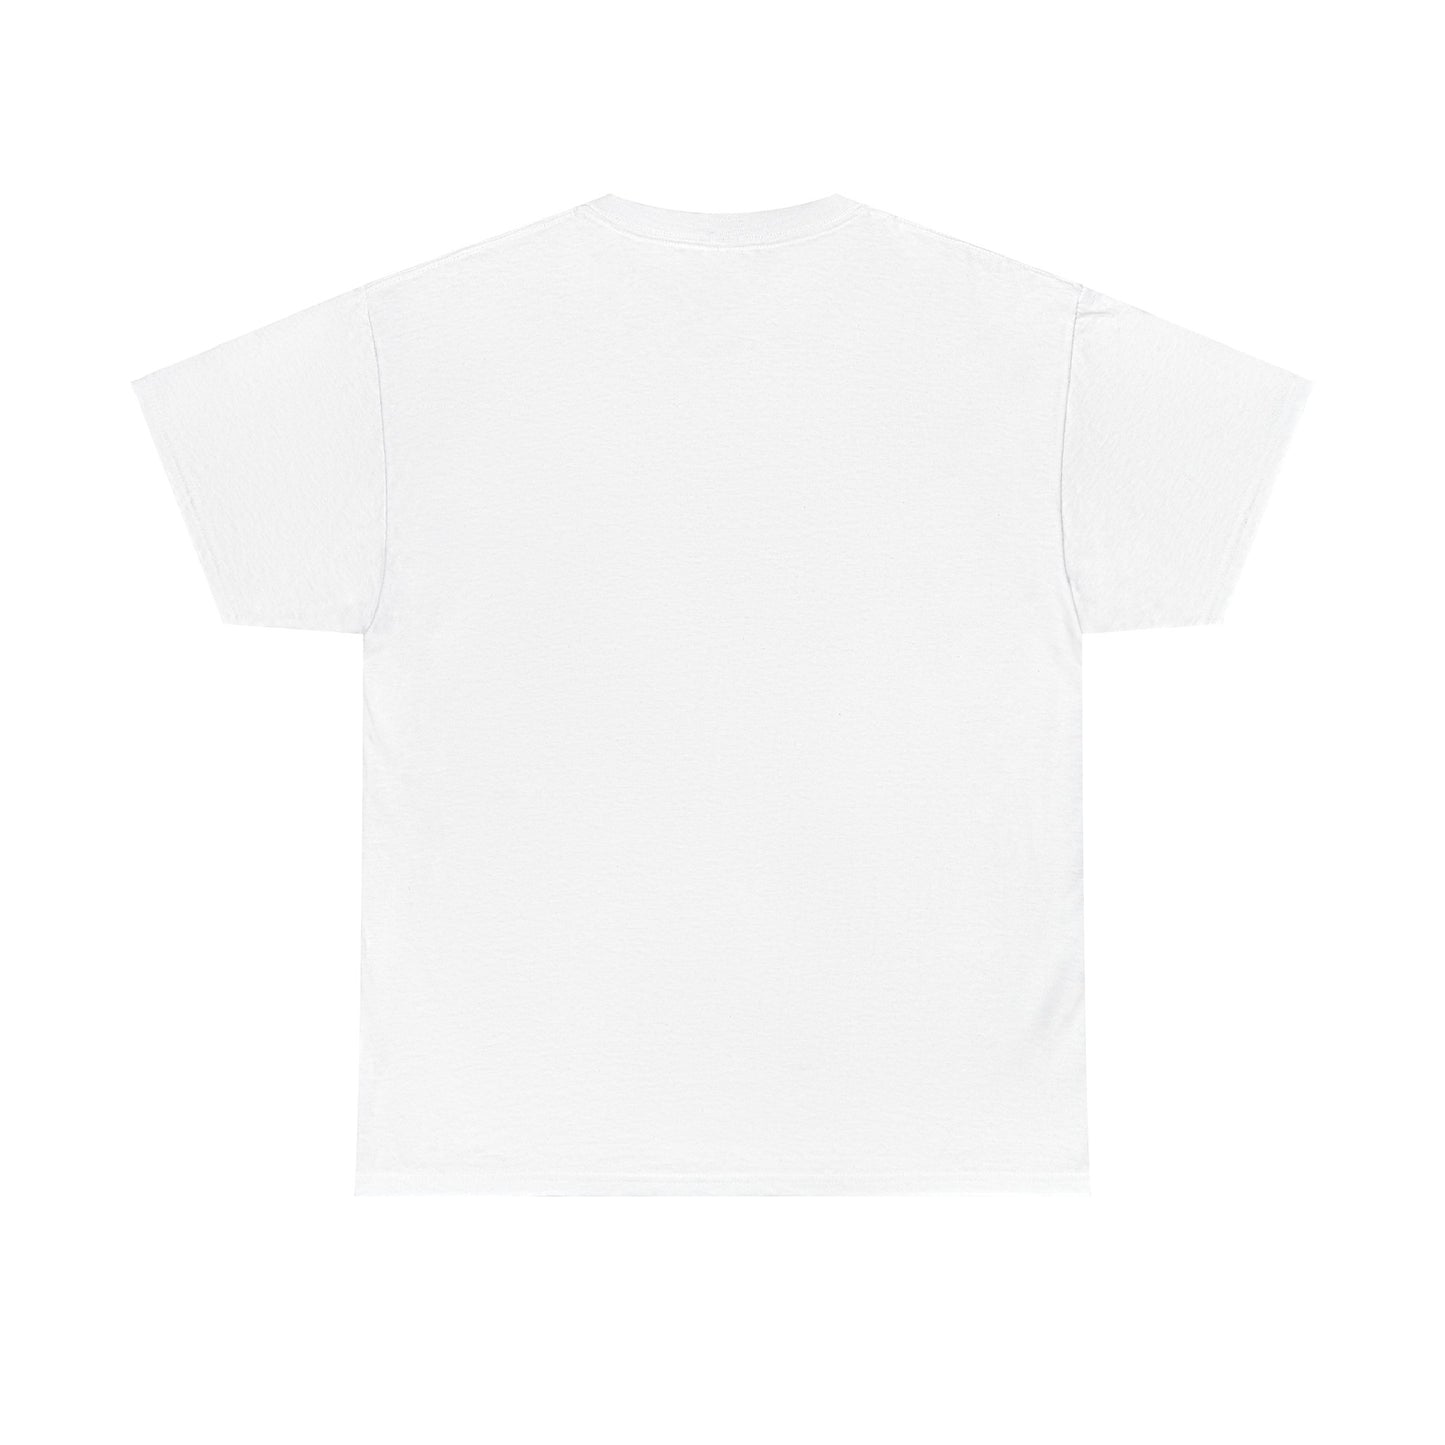 Unisex Heavy Cotton Graphic design (Accelerate) T-shirt